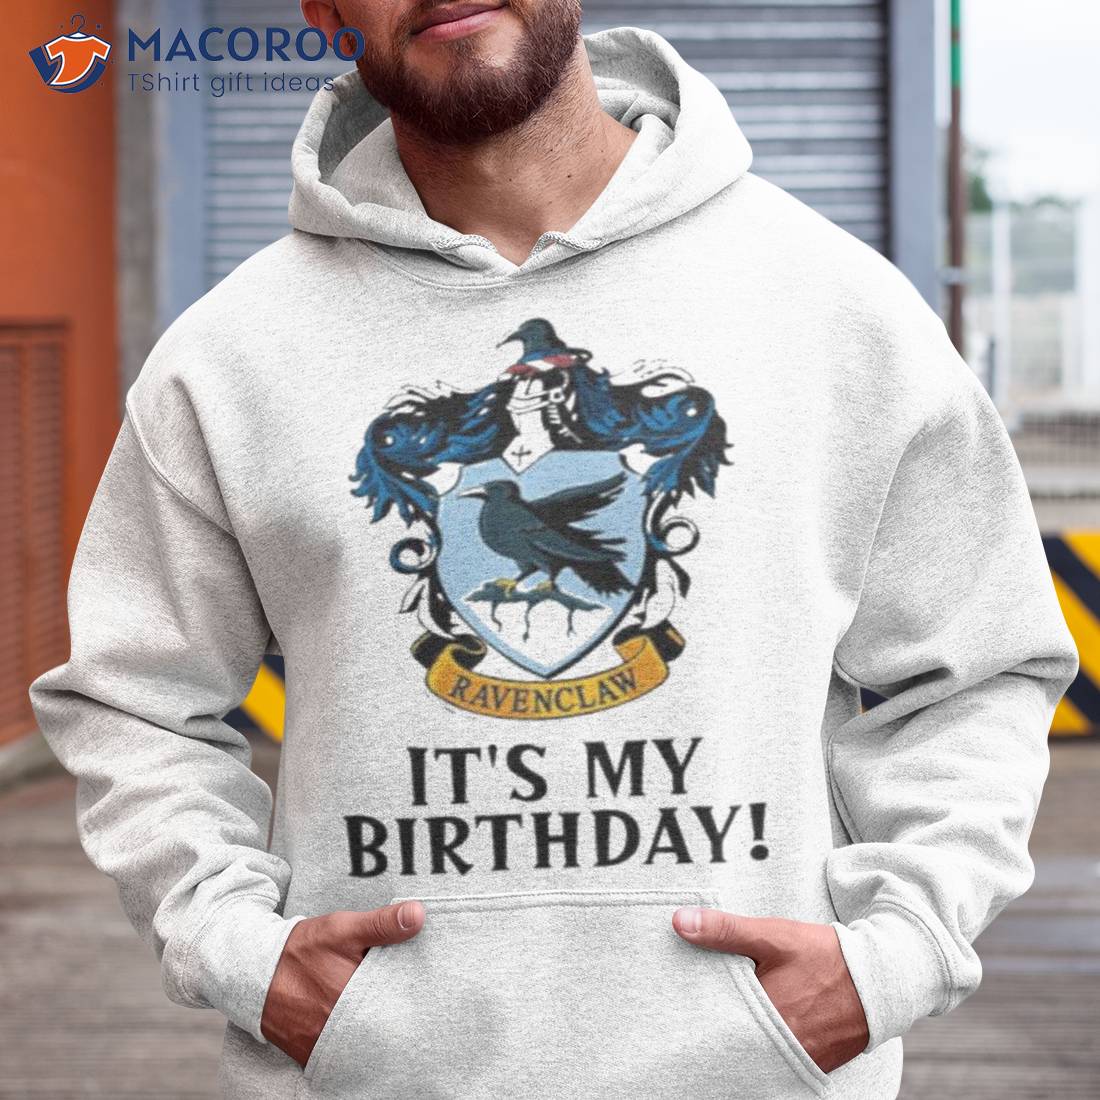 Ravenclaw It's My Birthday Hp Potter Shirt